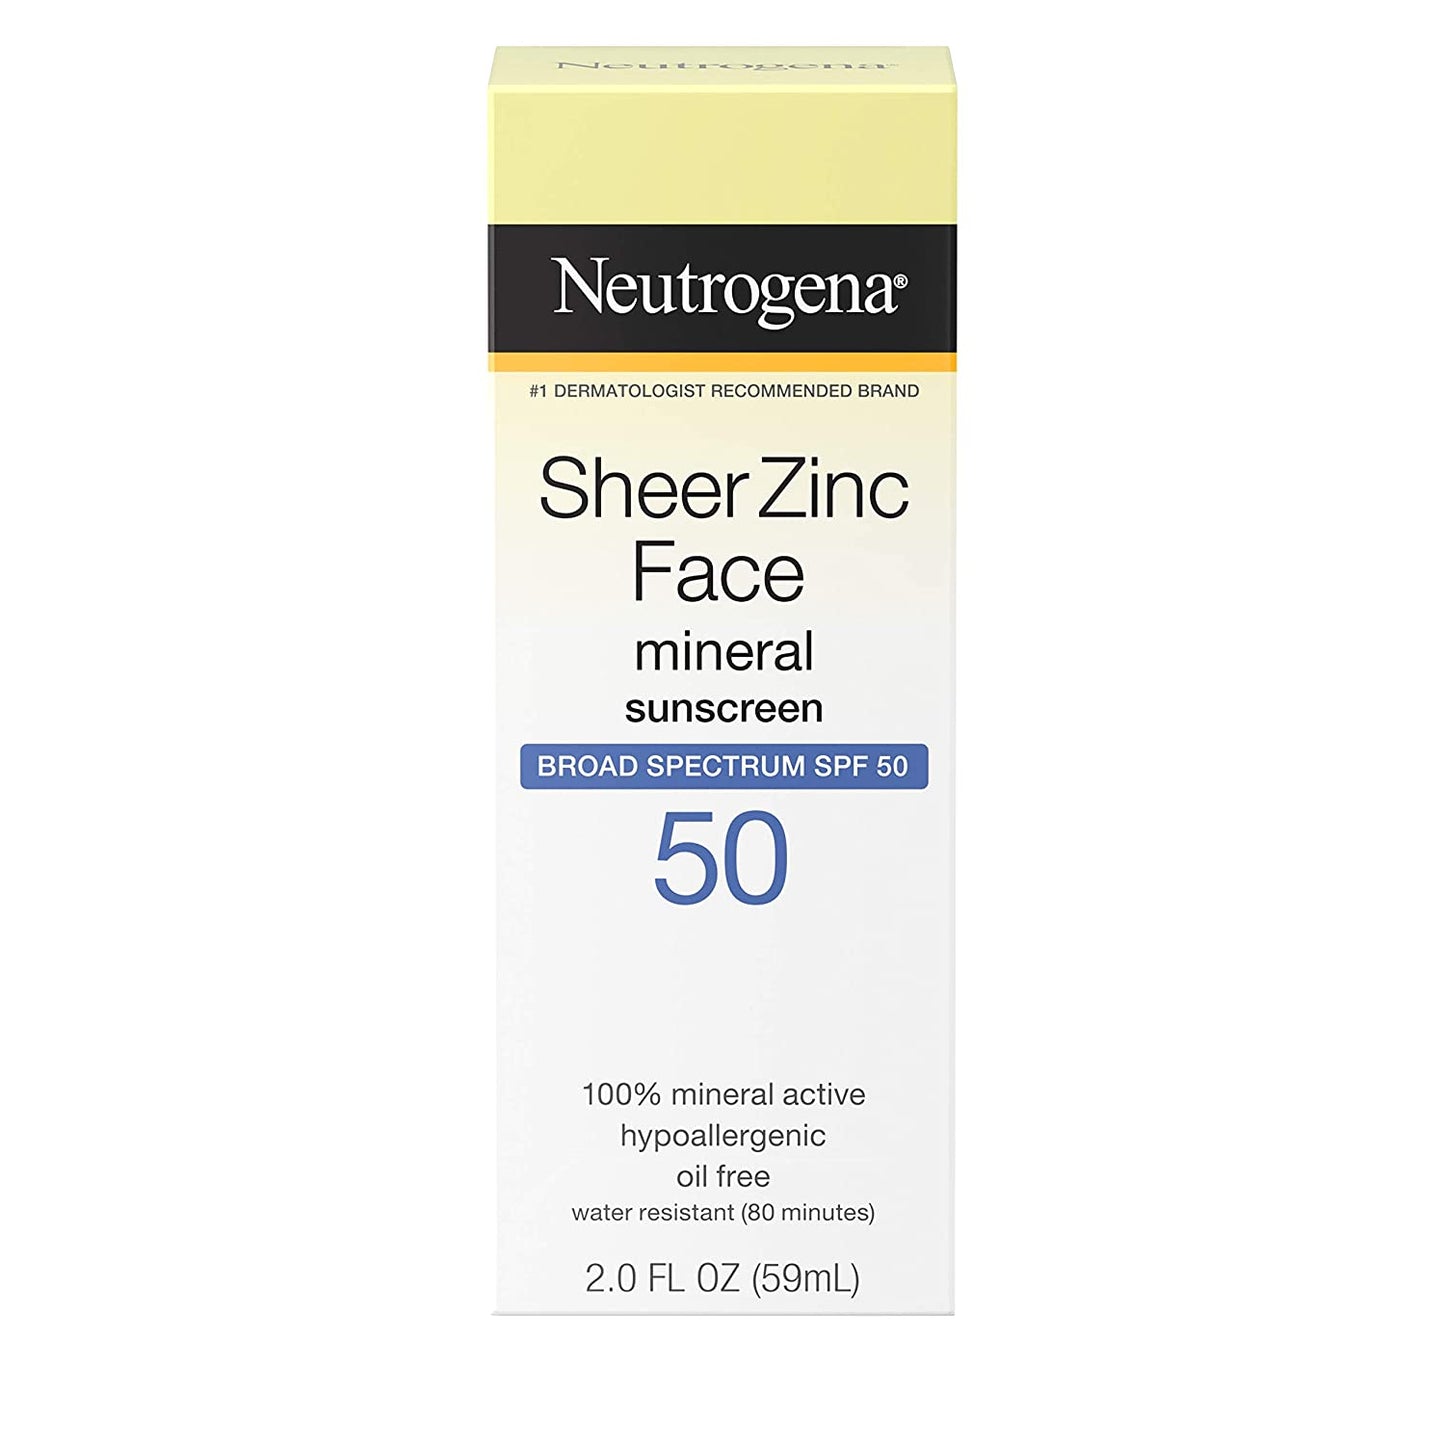 Neutrogena Sheer Zinc Face Mineral Sunscreen Lotion SPF 50, Oil-free & Water Resistant, 2.0 fl.oz / 59ml